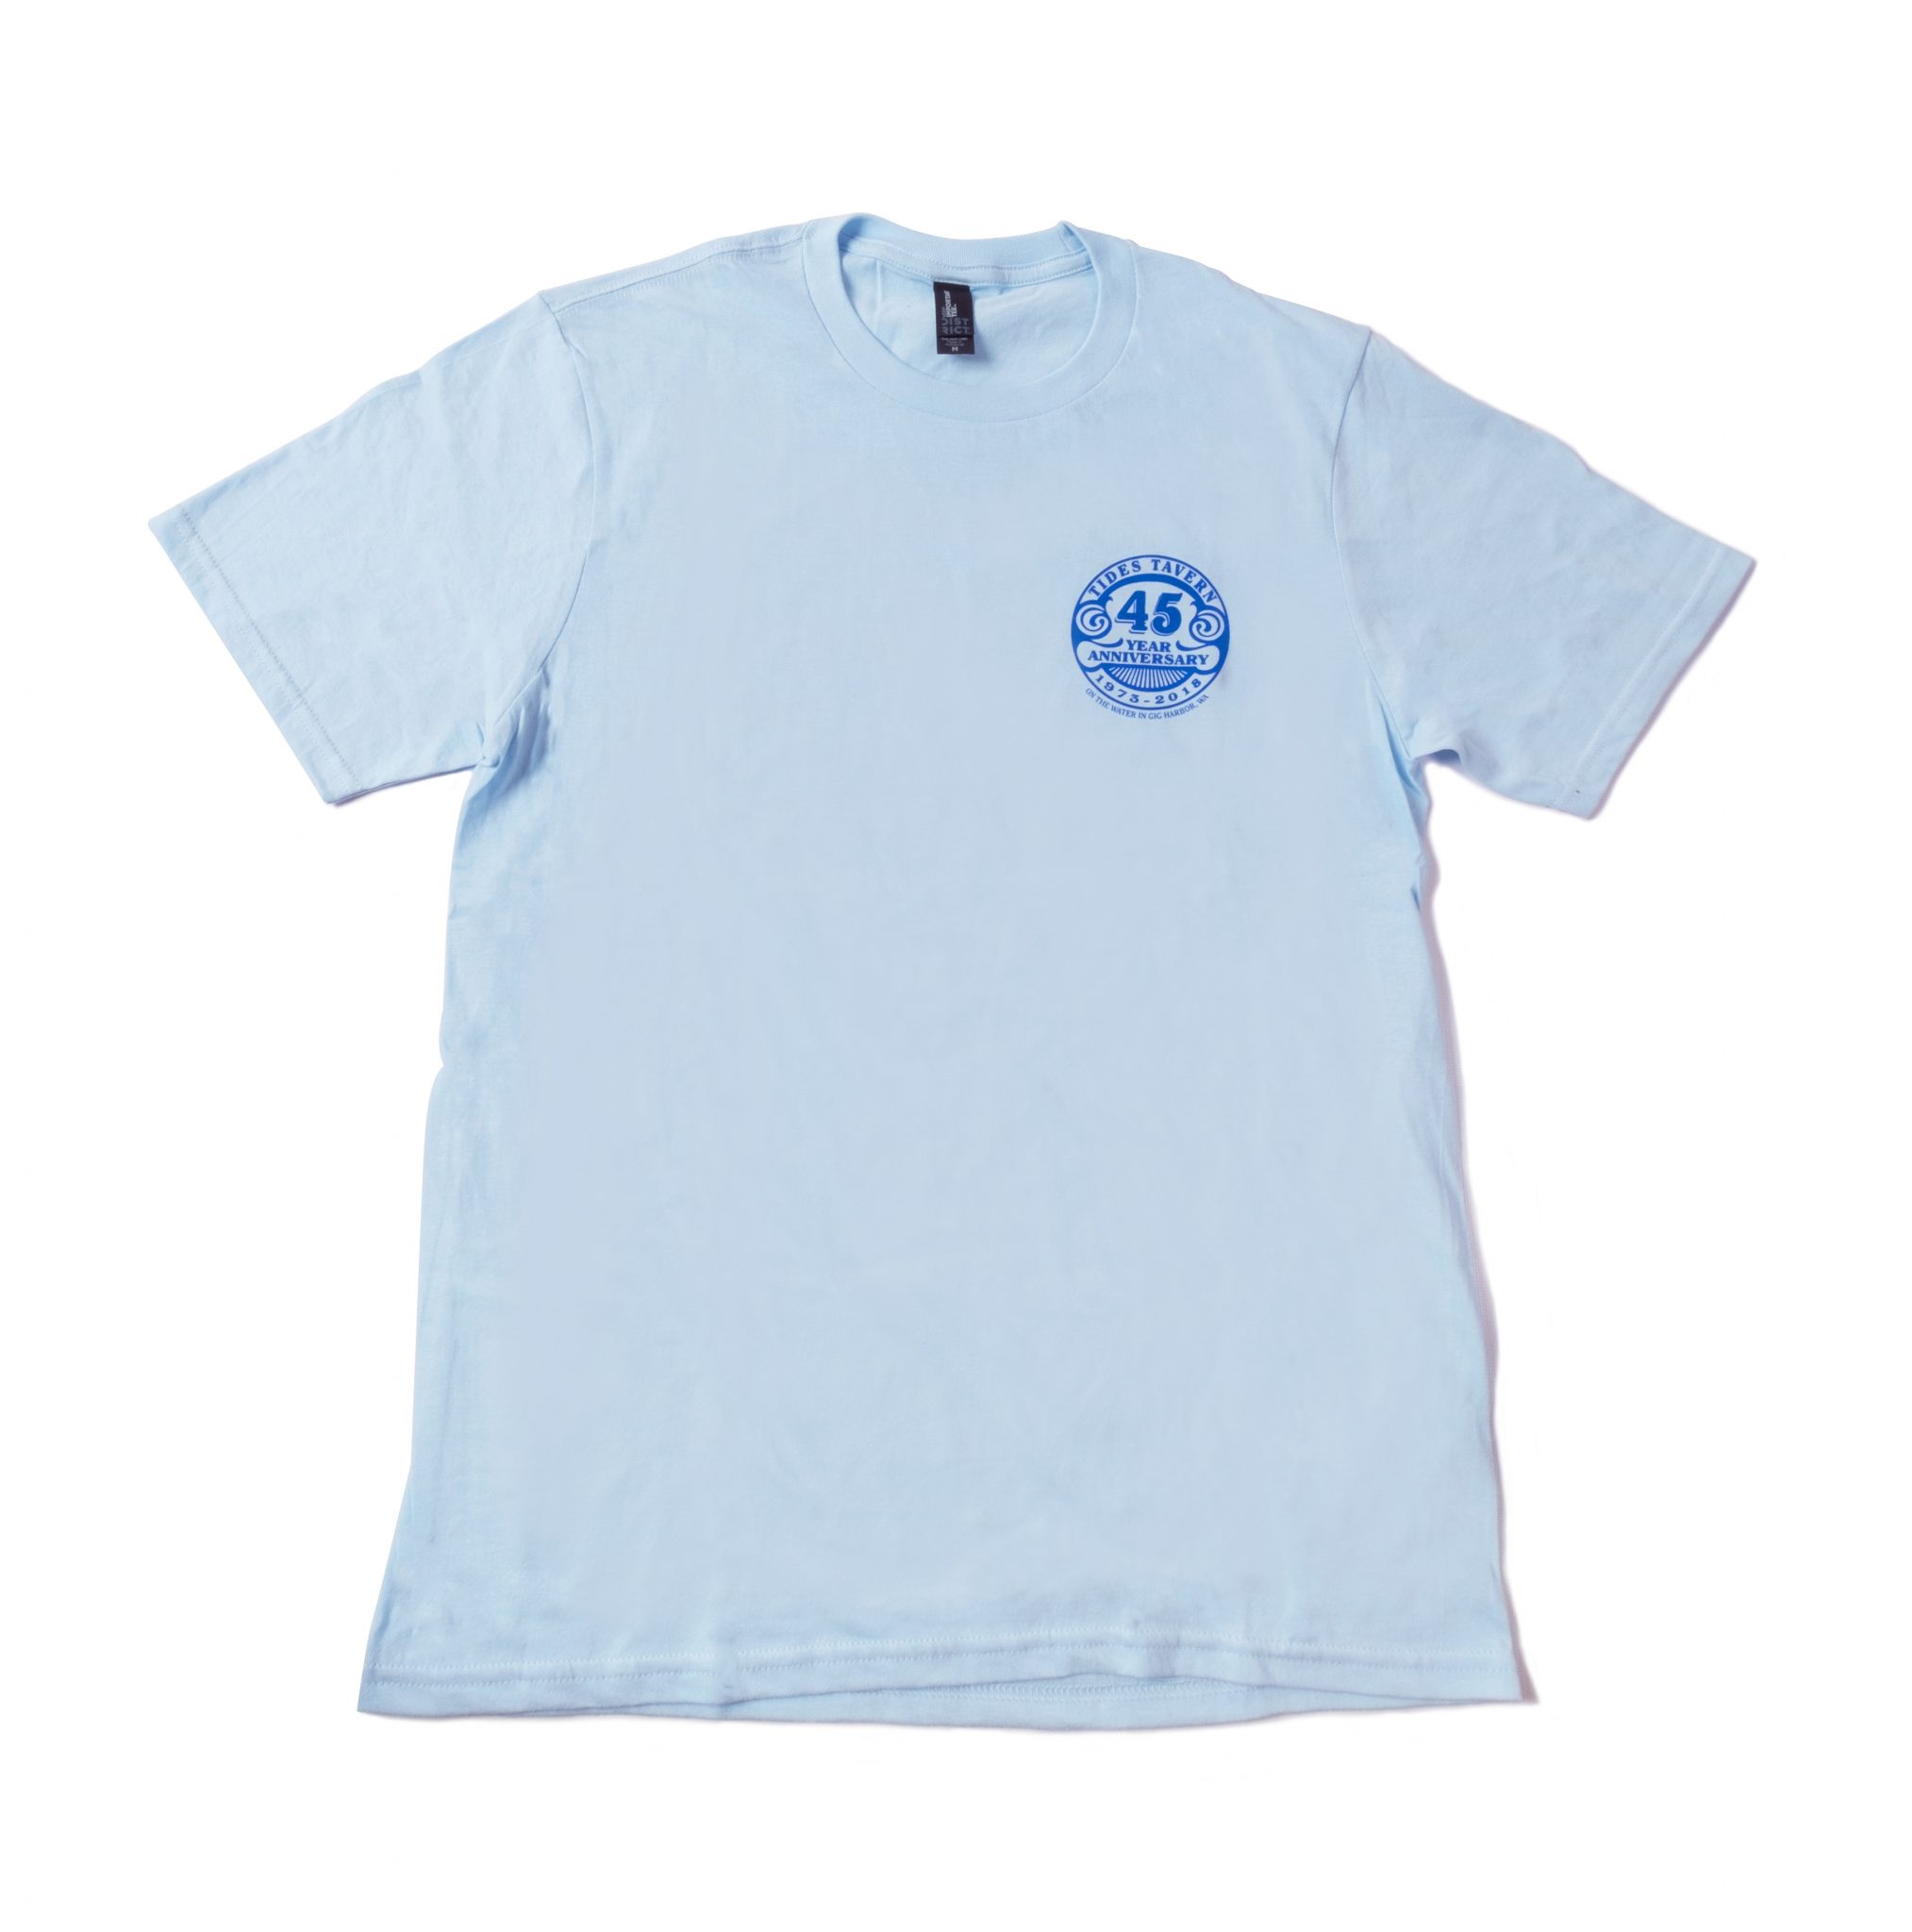 Tides 45th Anniversary T-Shirt - Blue